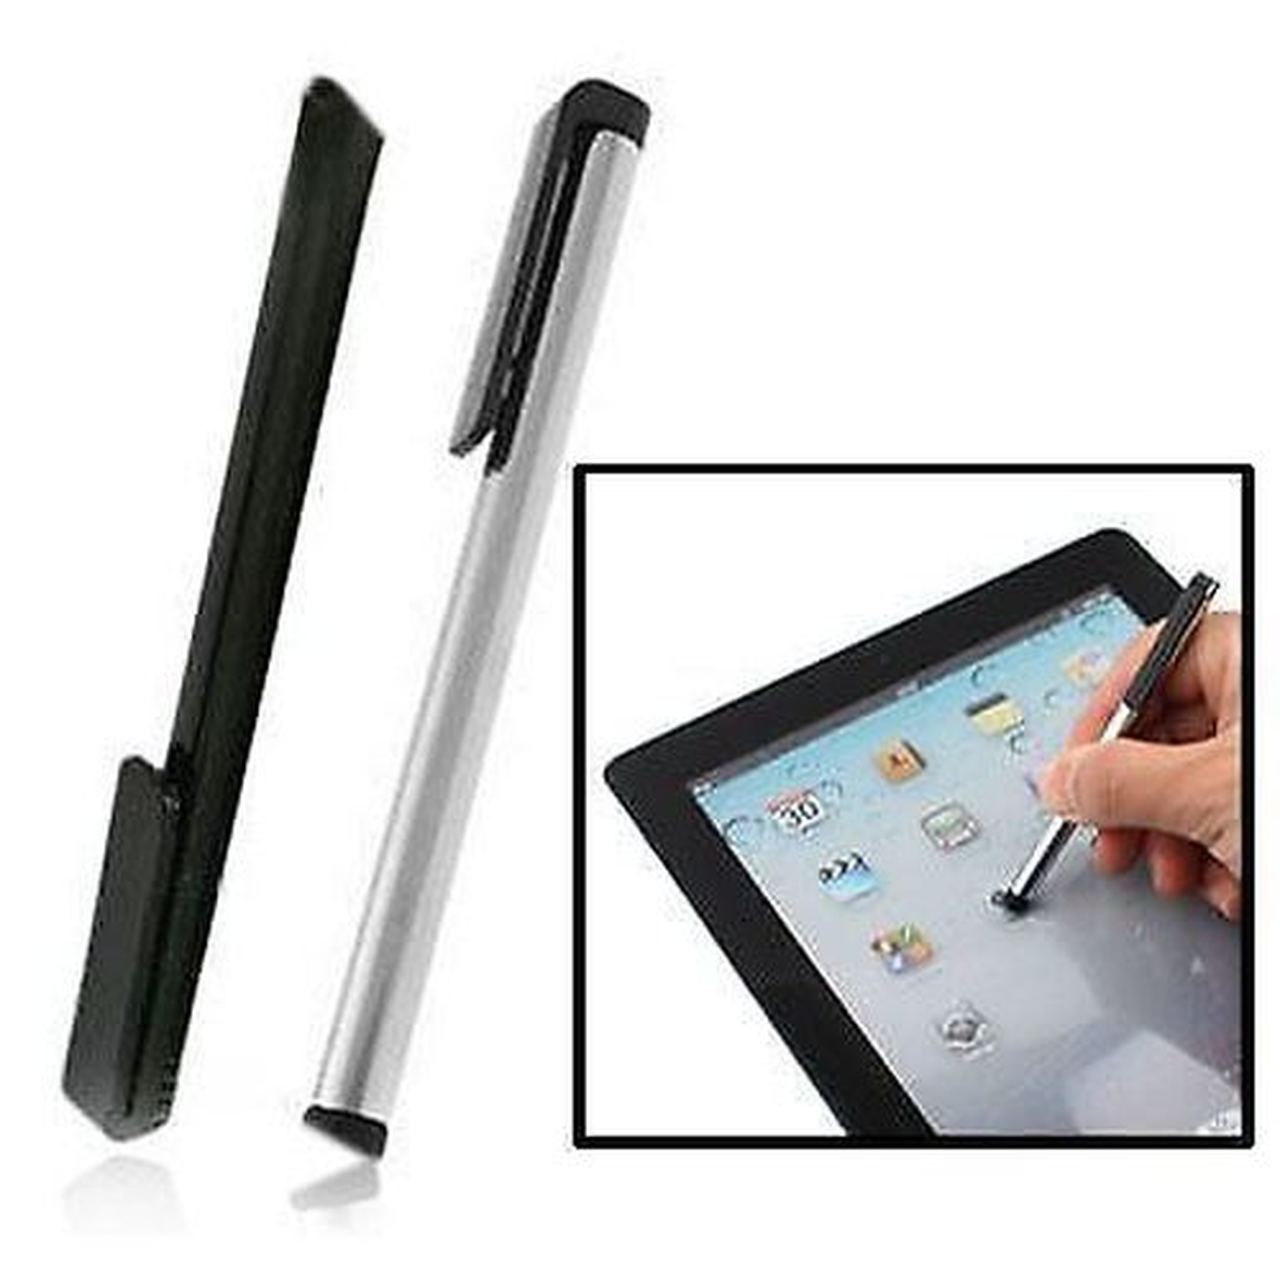 Stylus Smartphone & Tablet Pen 2 Pack